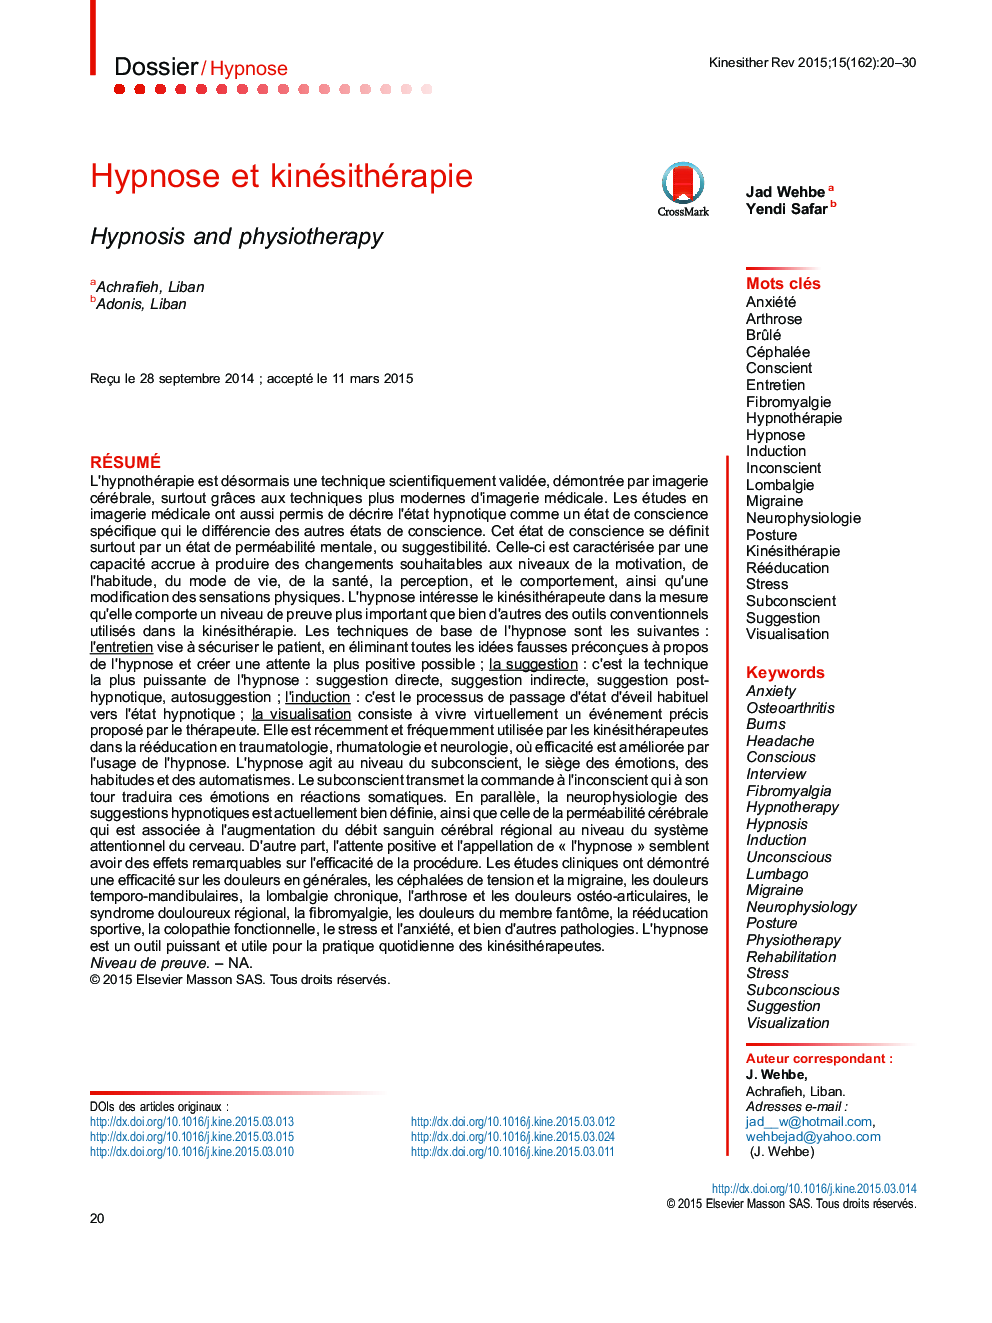 Hypnose et kinésithérapie